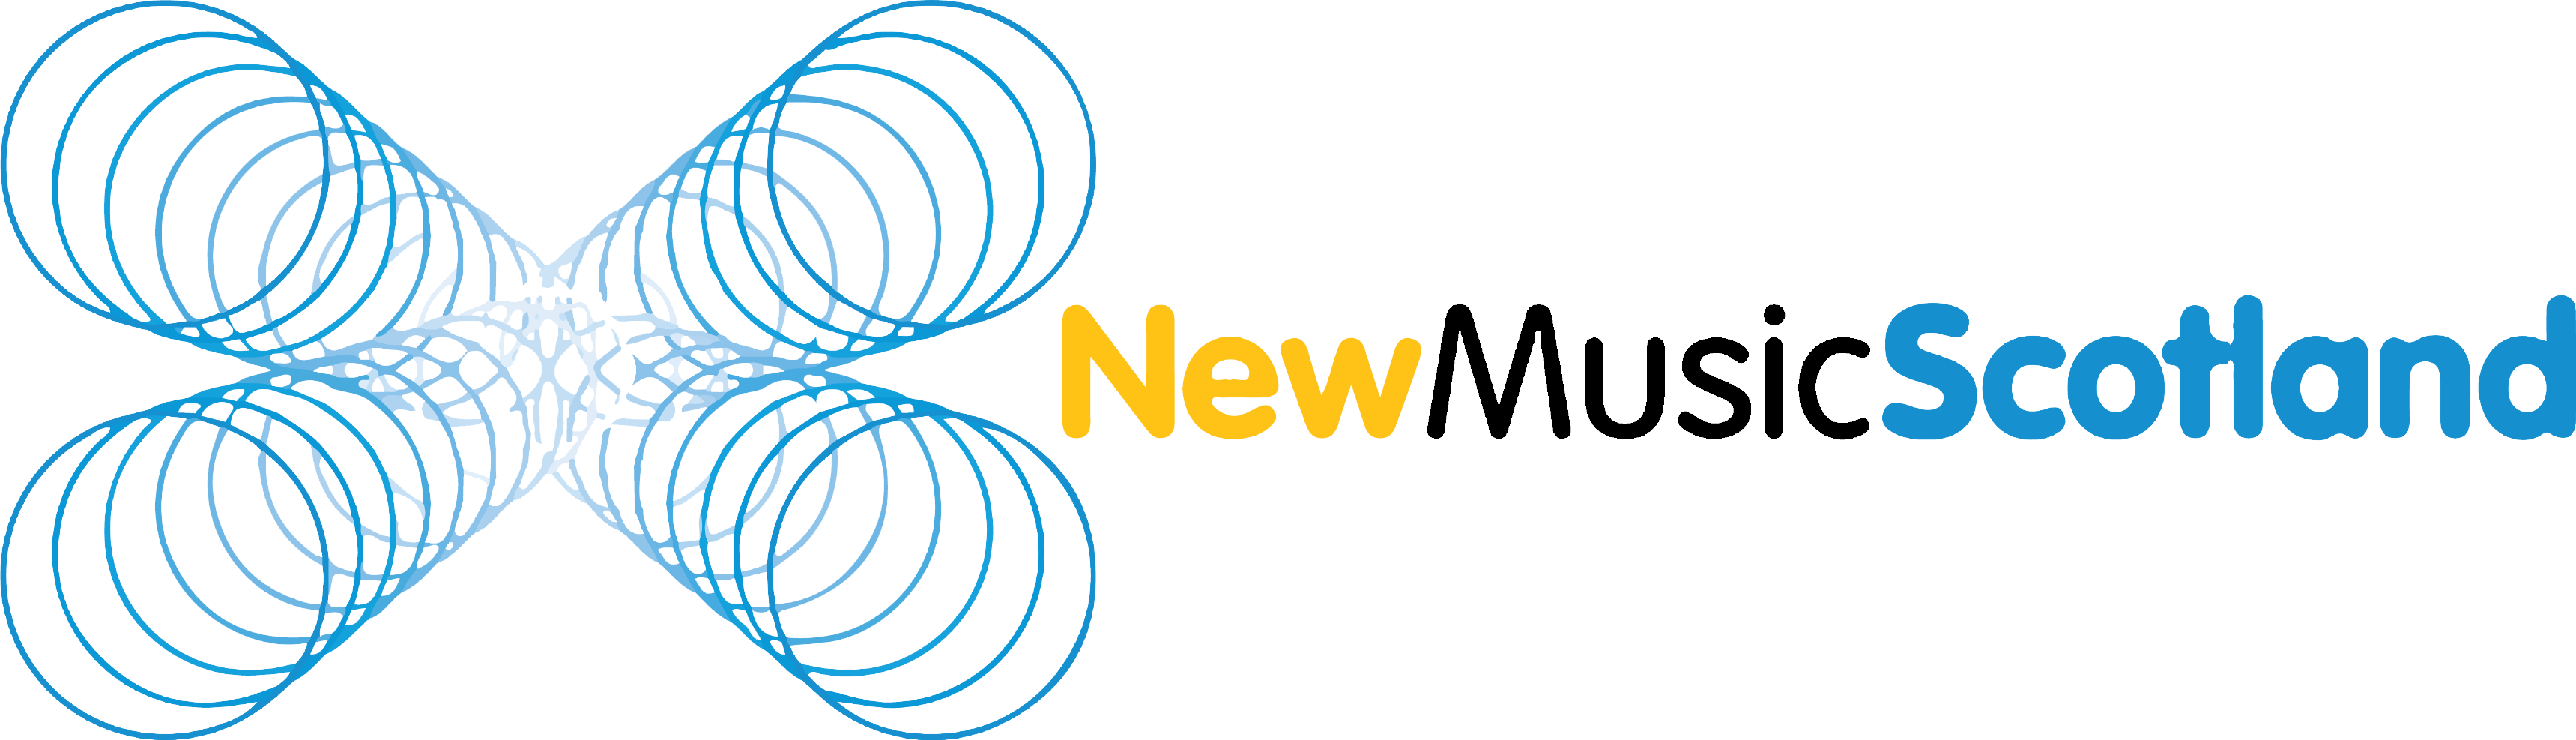 New Music of Scotland logo